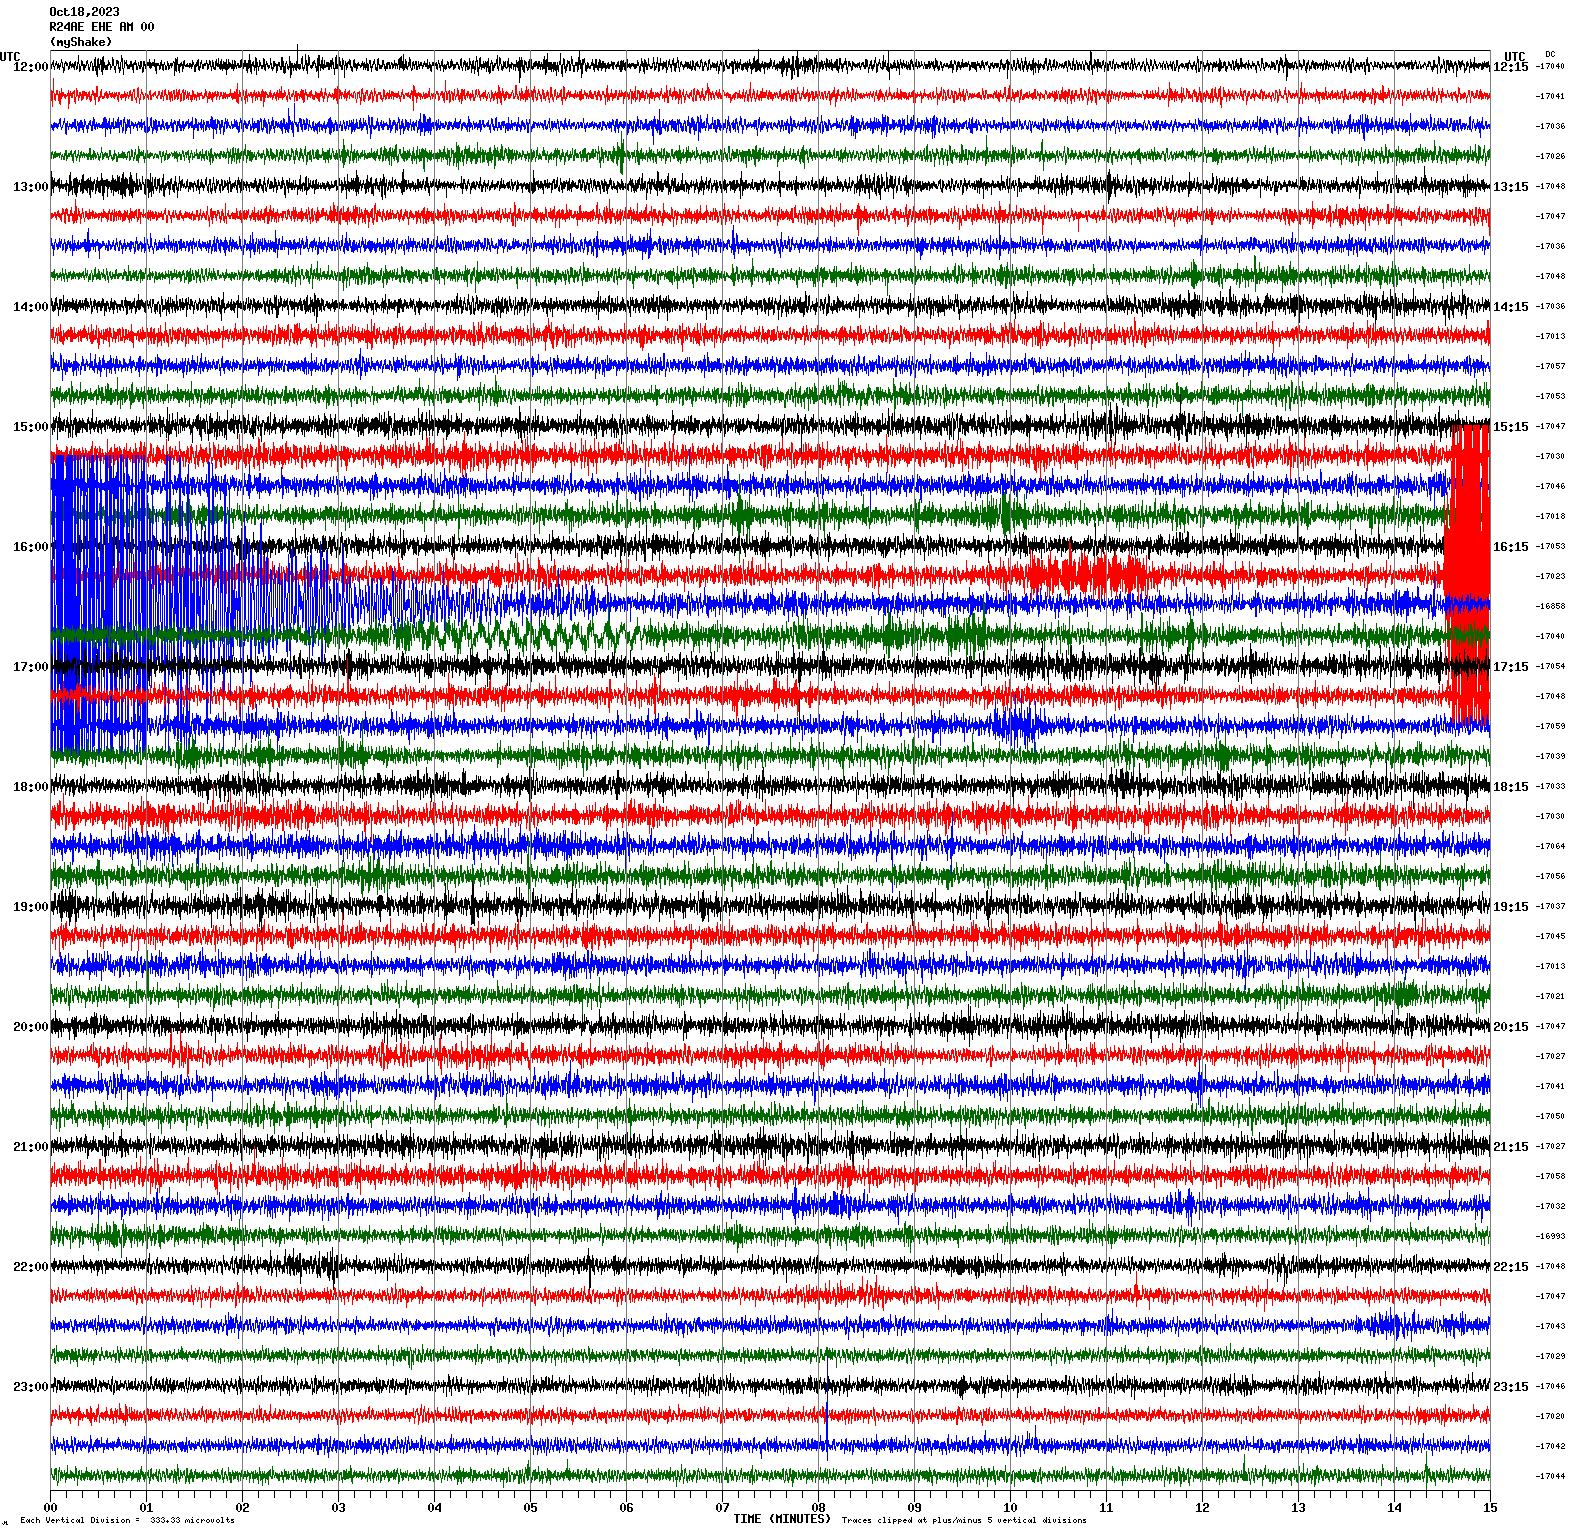 /seismic-data/R24AE/R24AE_EHE_AM_00.2023101812.gif